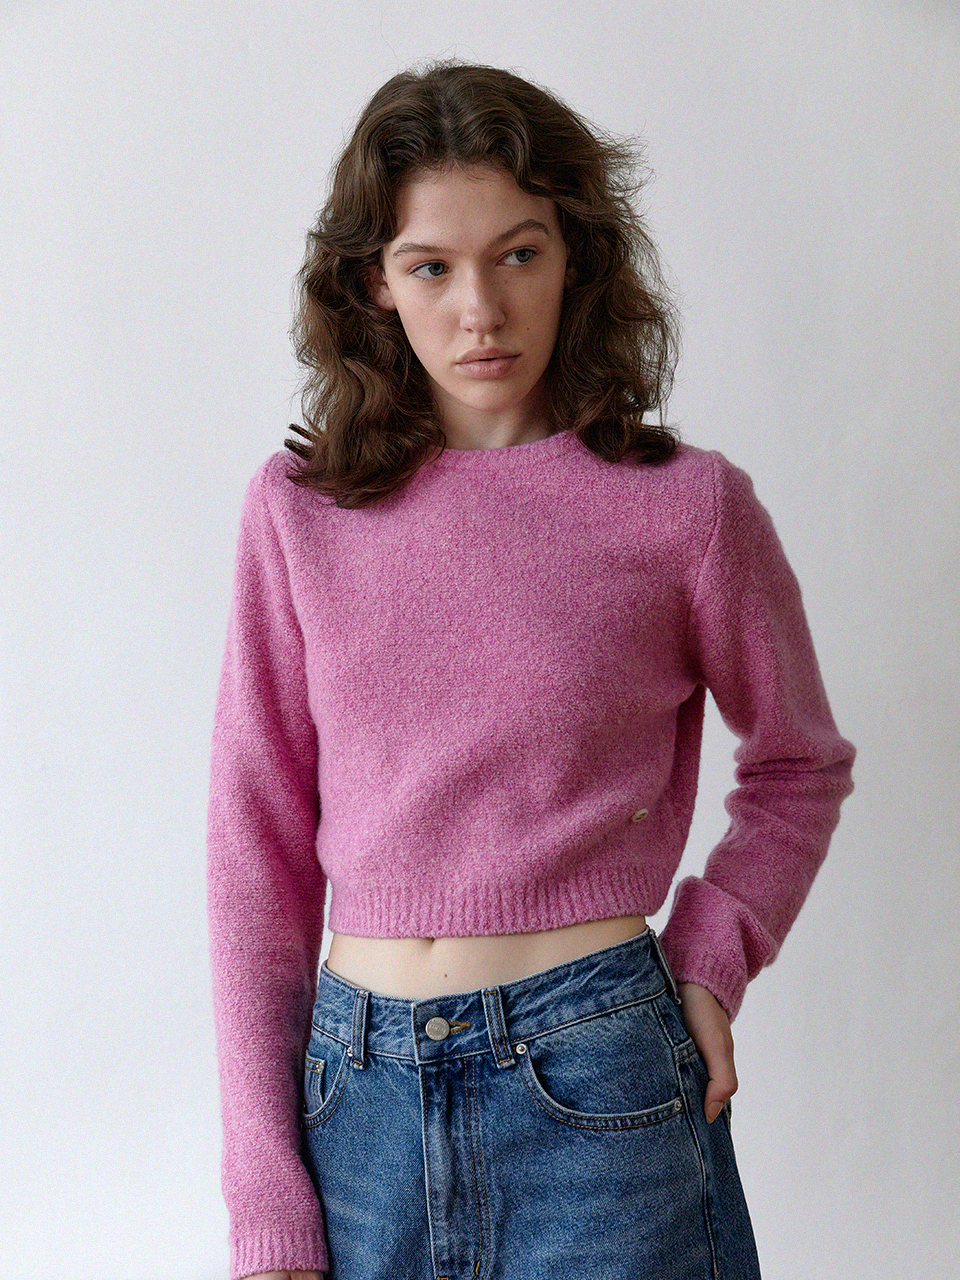 american boucle knit - pinkBRENDA BRENDEN